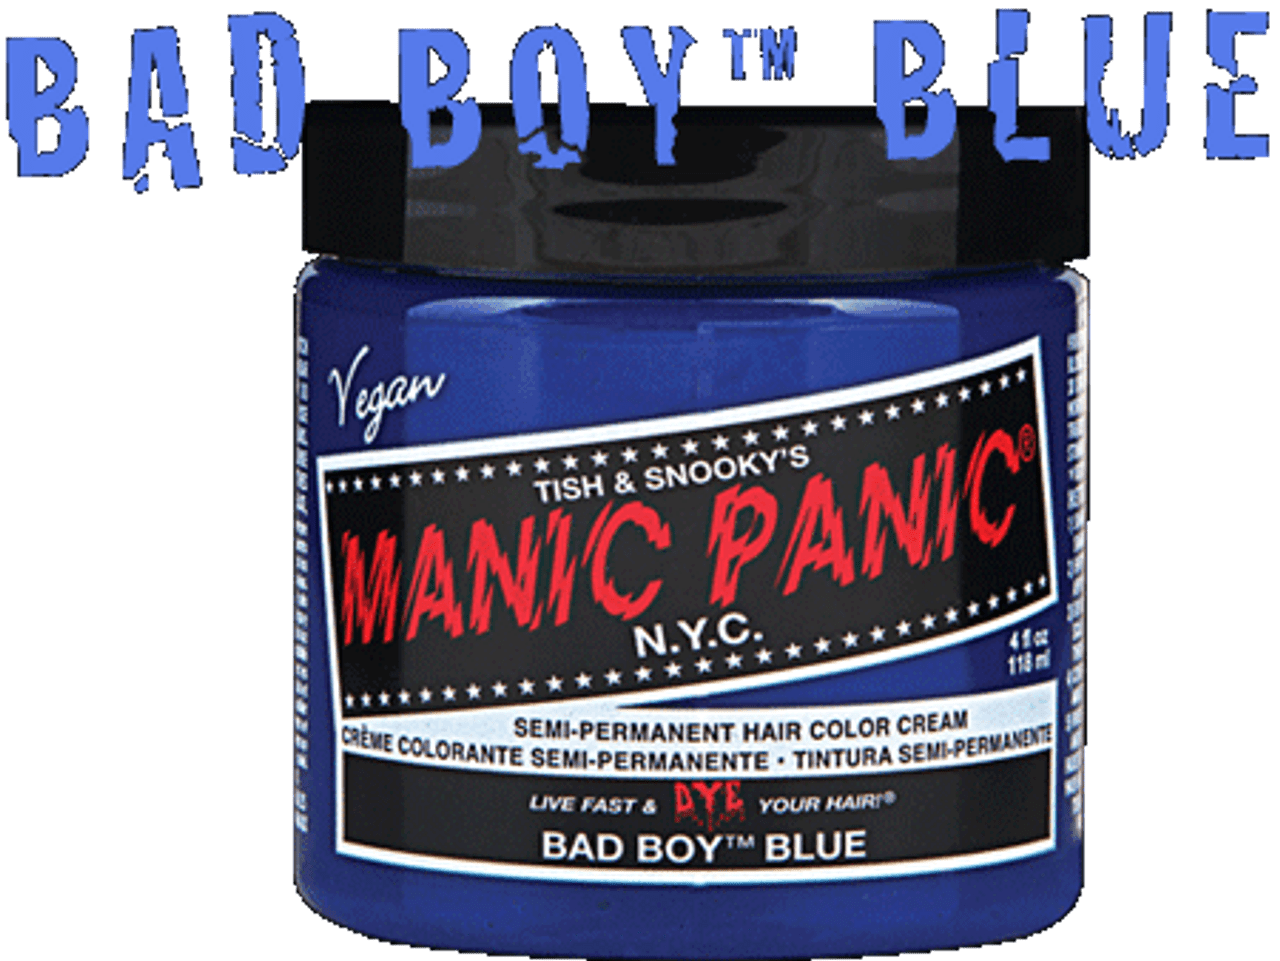 Manic Panic Semi-Permanent Hair Color Cream - wide 5